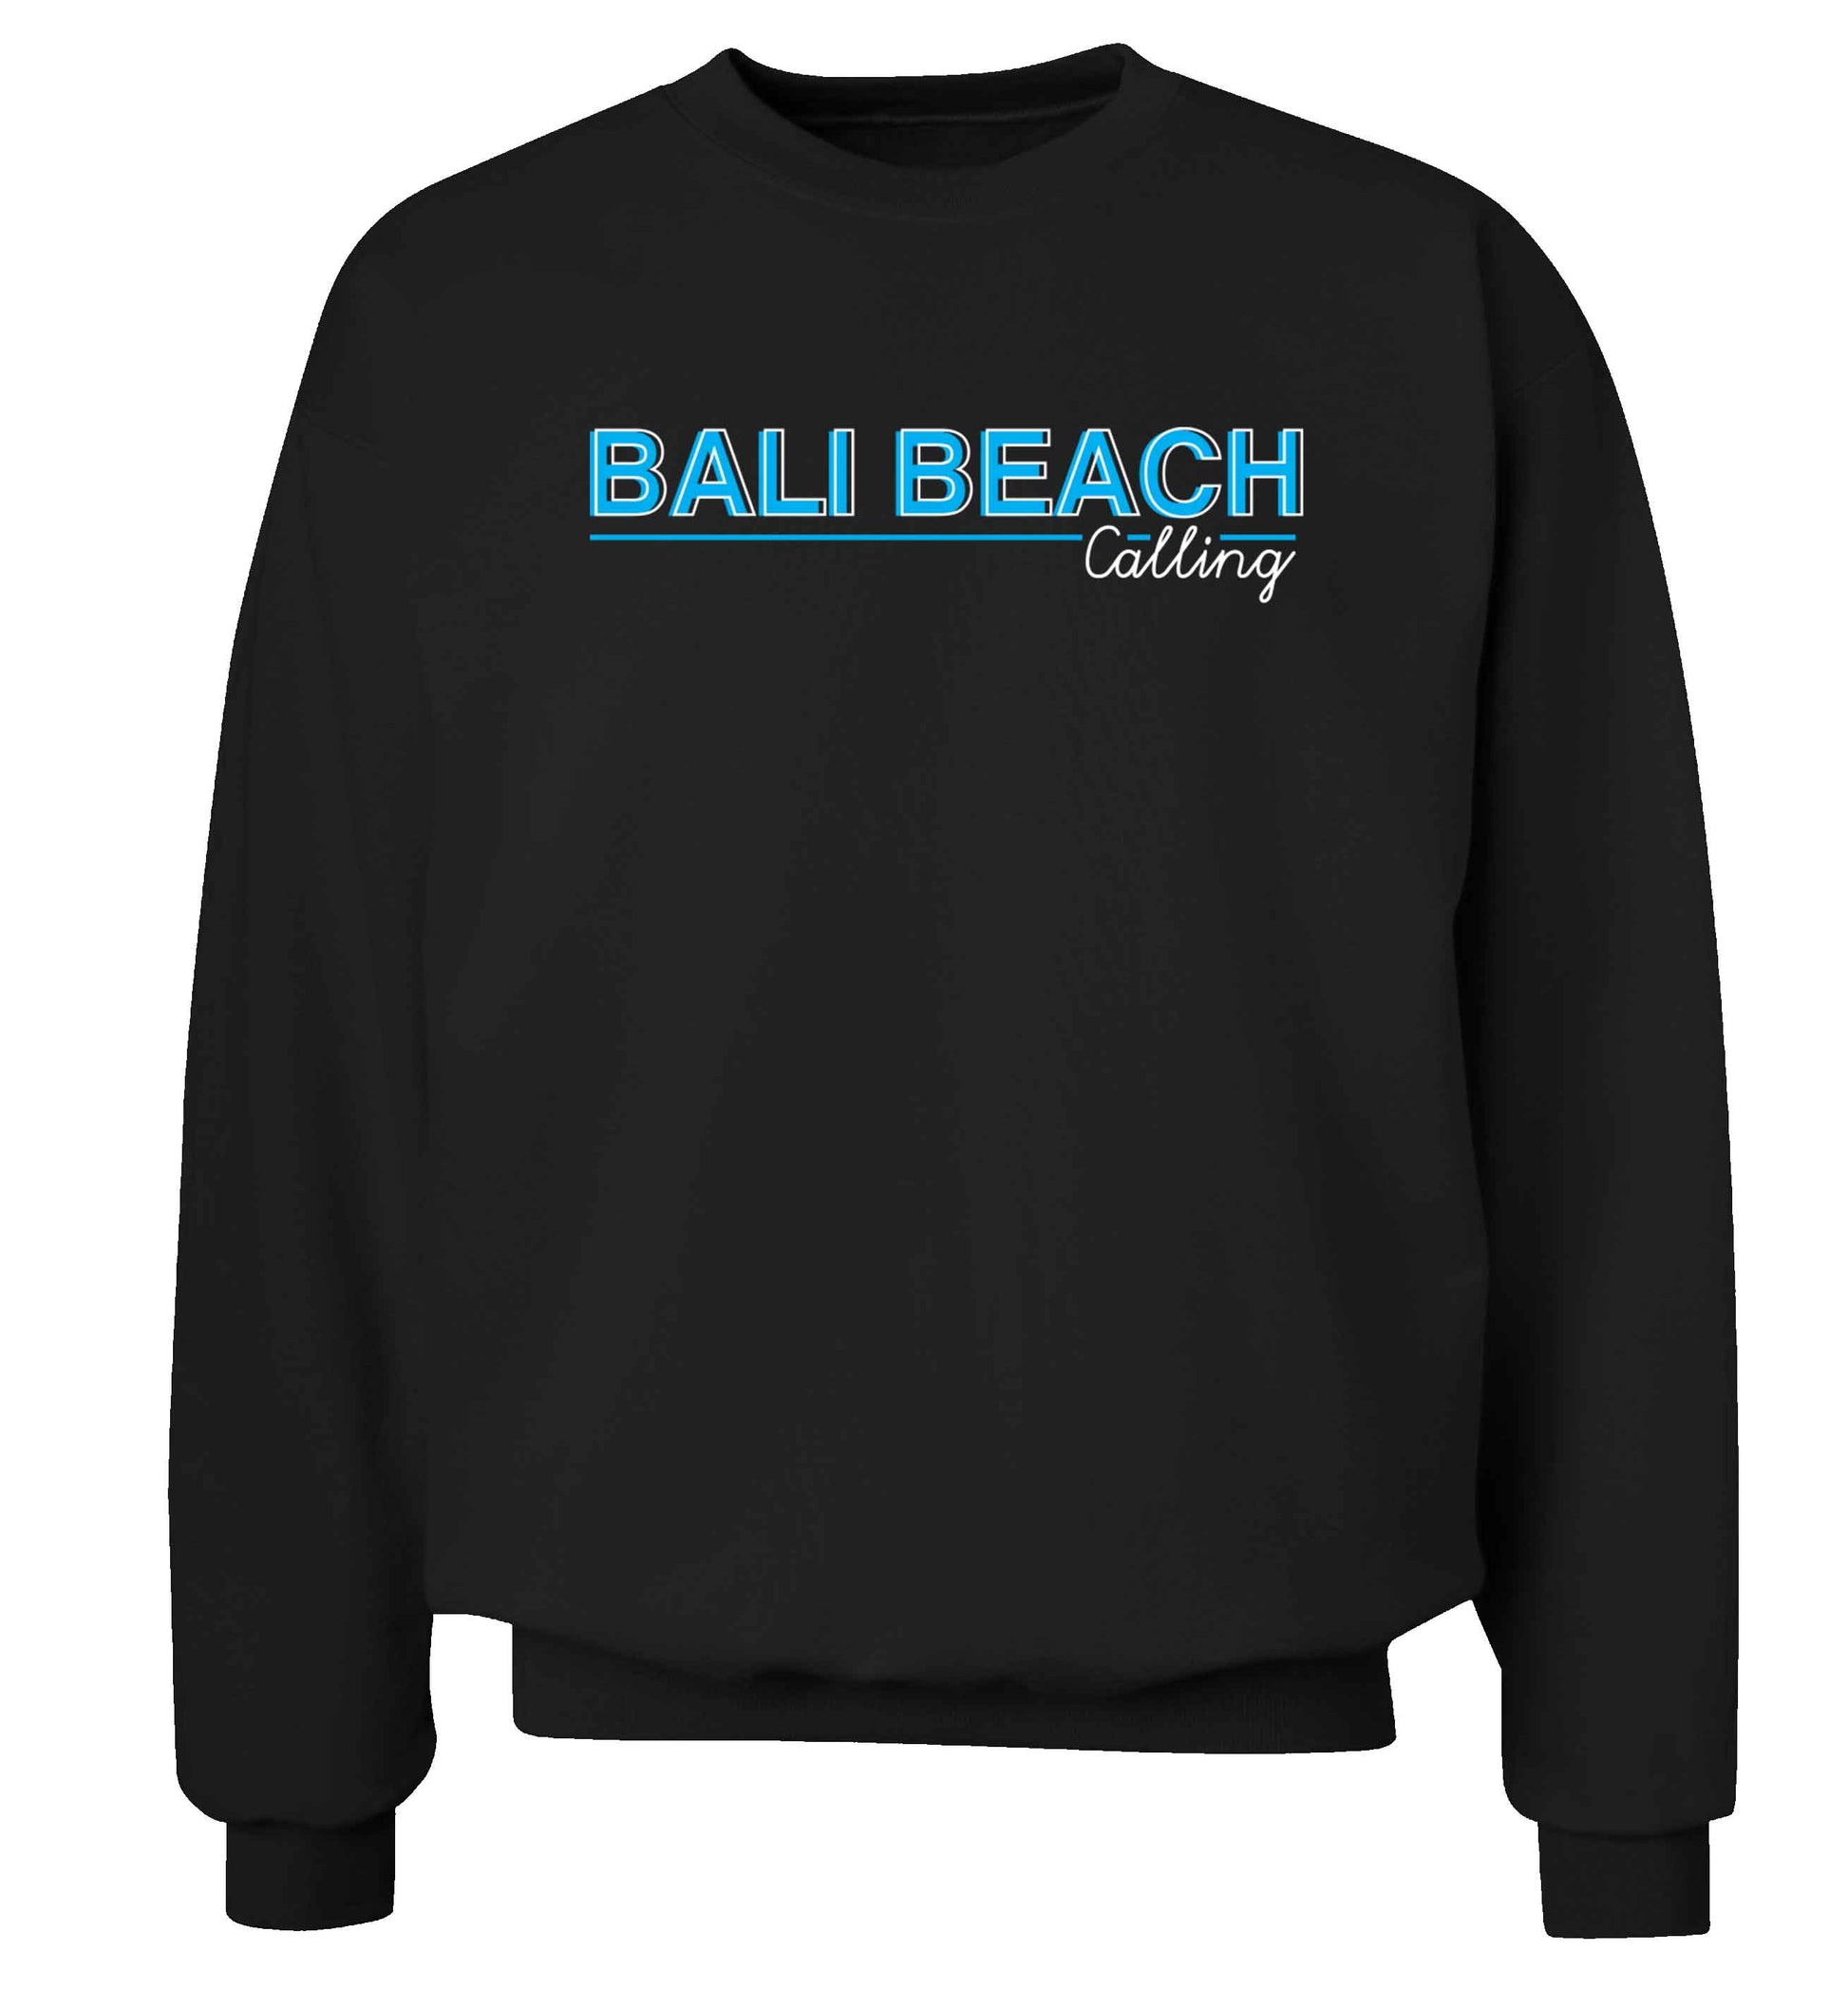 Bali beach calling Adult's unisex black Sweater 2XL